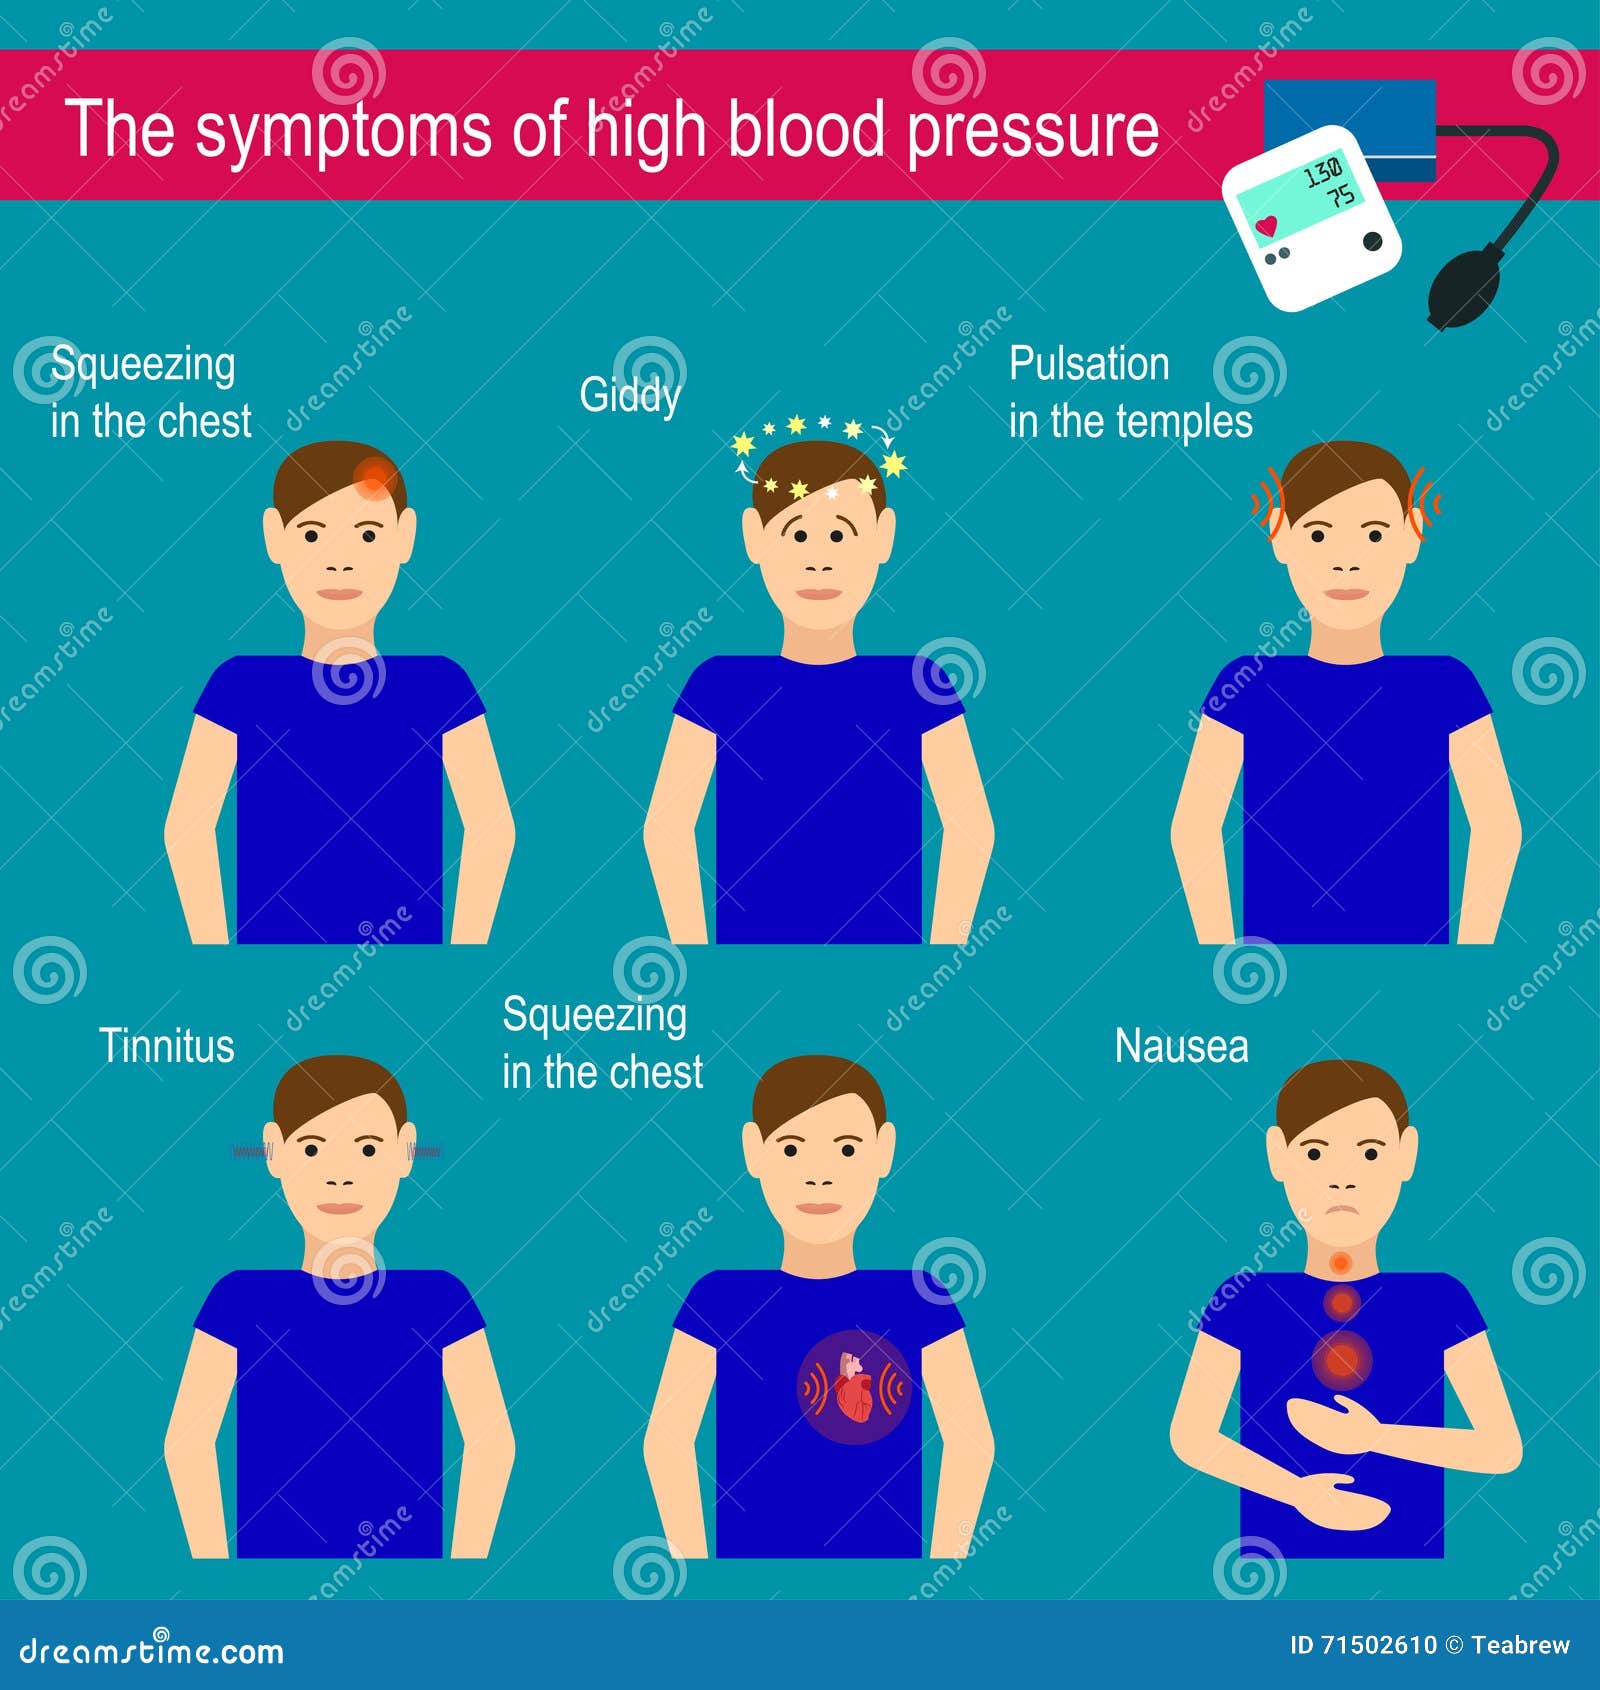 hypertension headaches symptoms